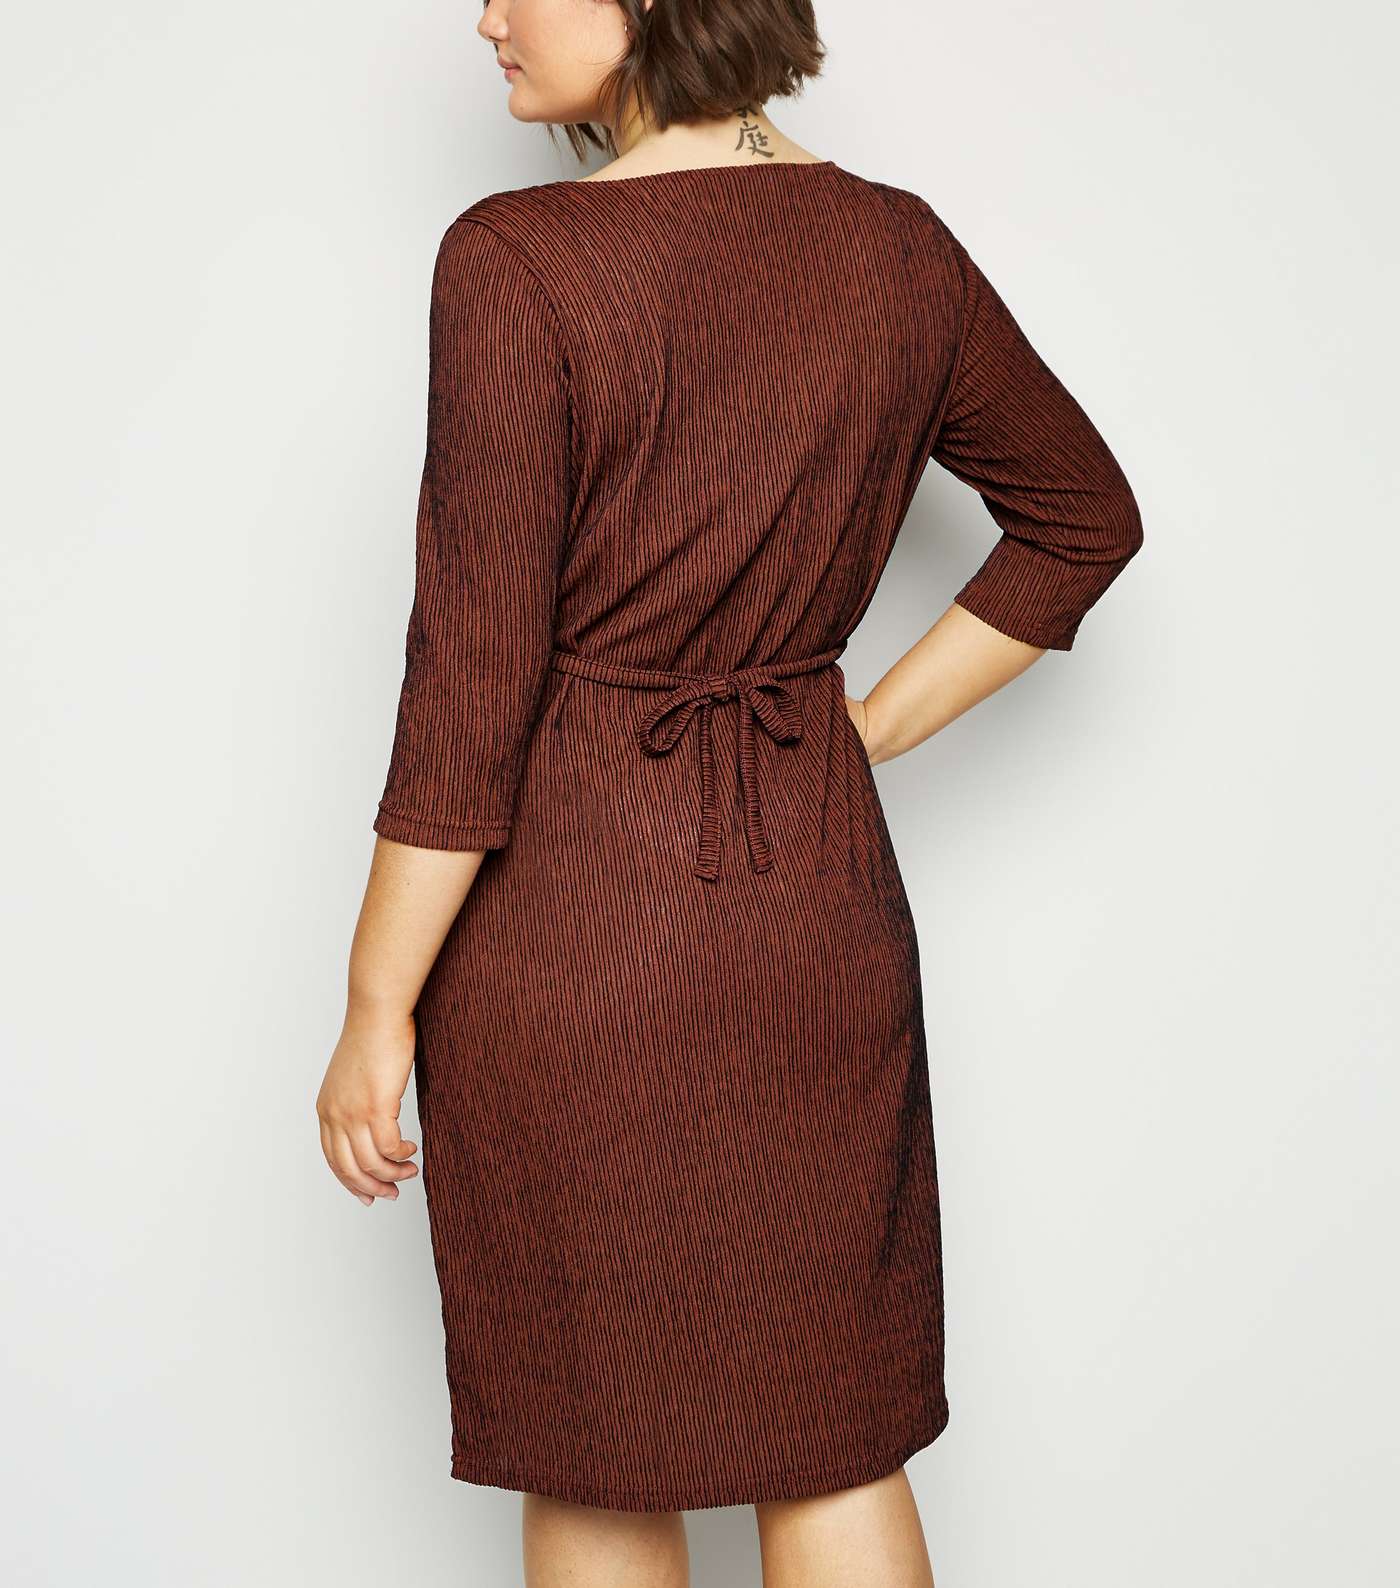 Vero Moda Curves Burgundy Stripe Textured Dress Image 3